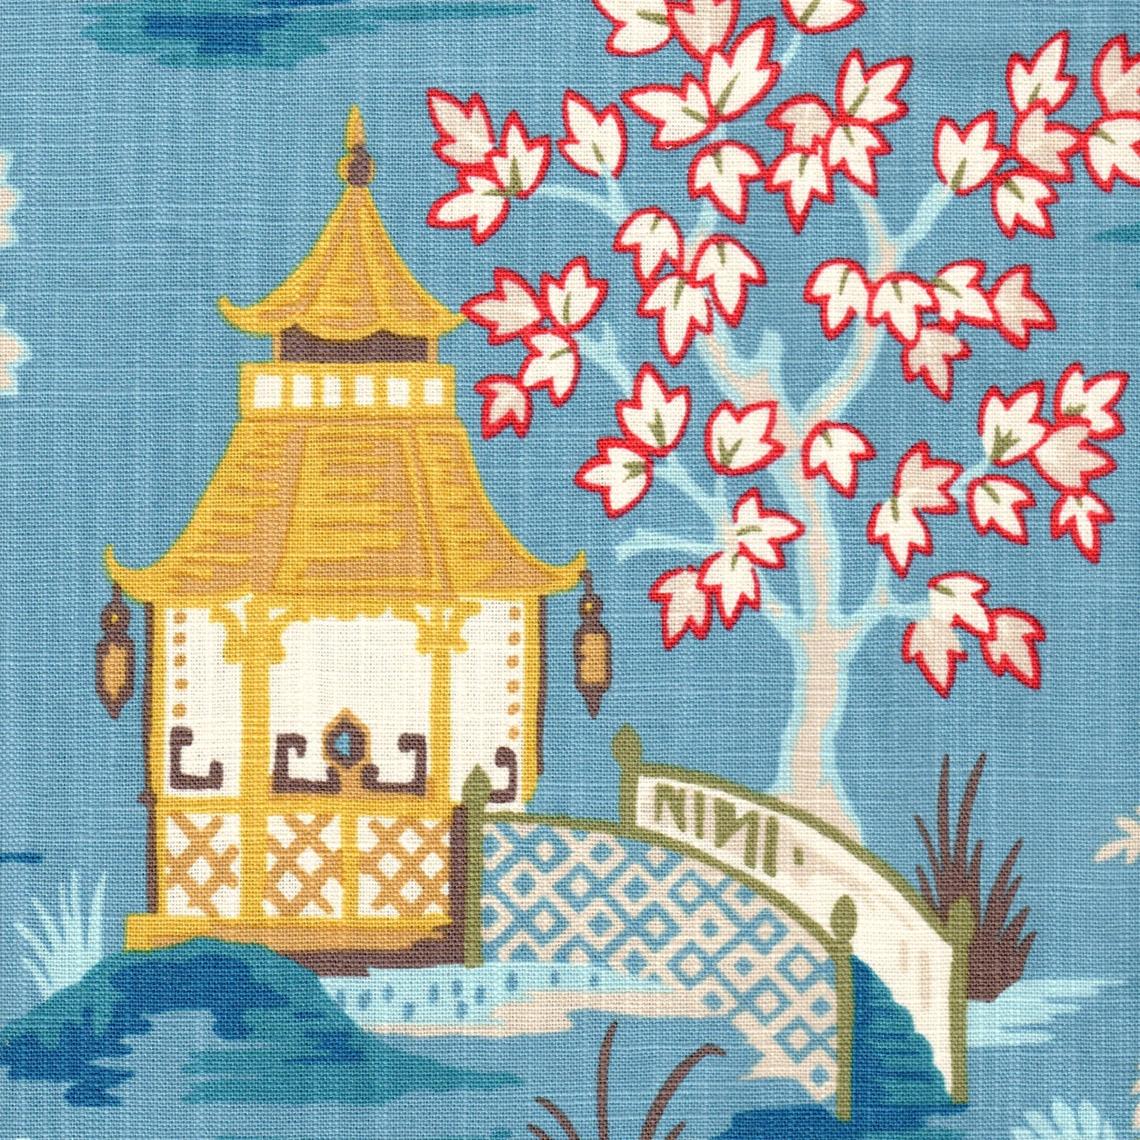 rod pocket curtain panels pair in shoji azure blue oriental toile multicolor chinoiserie